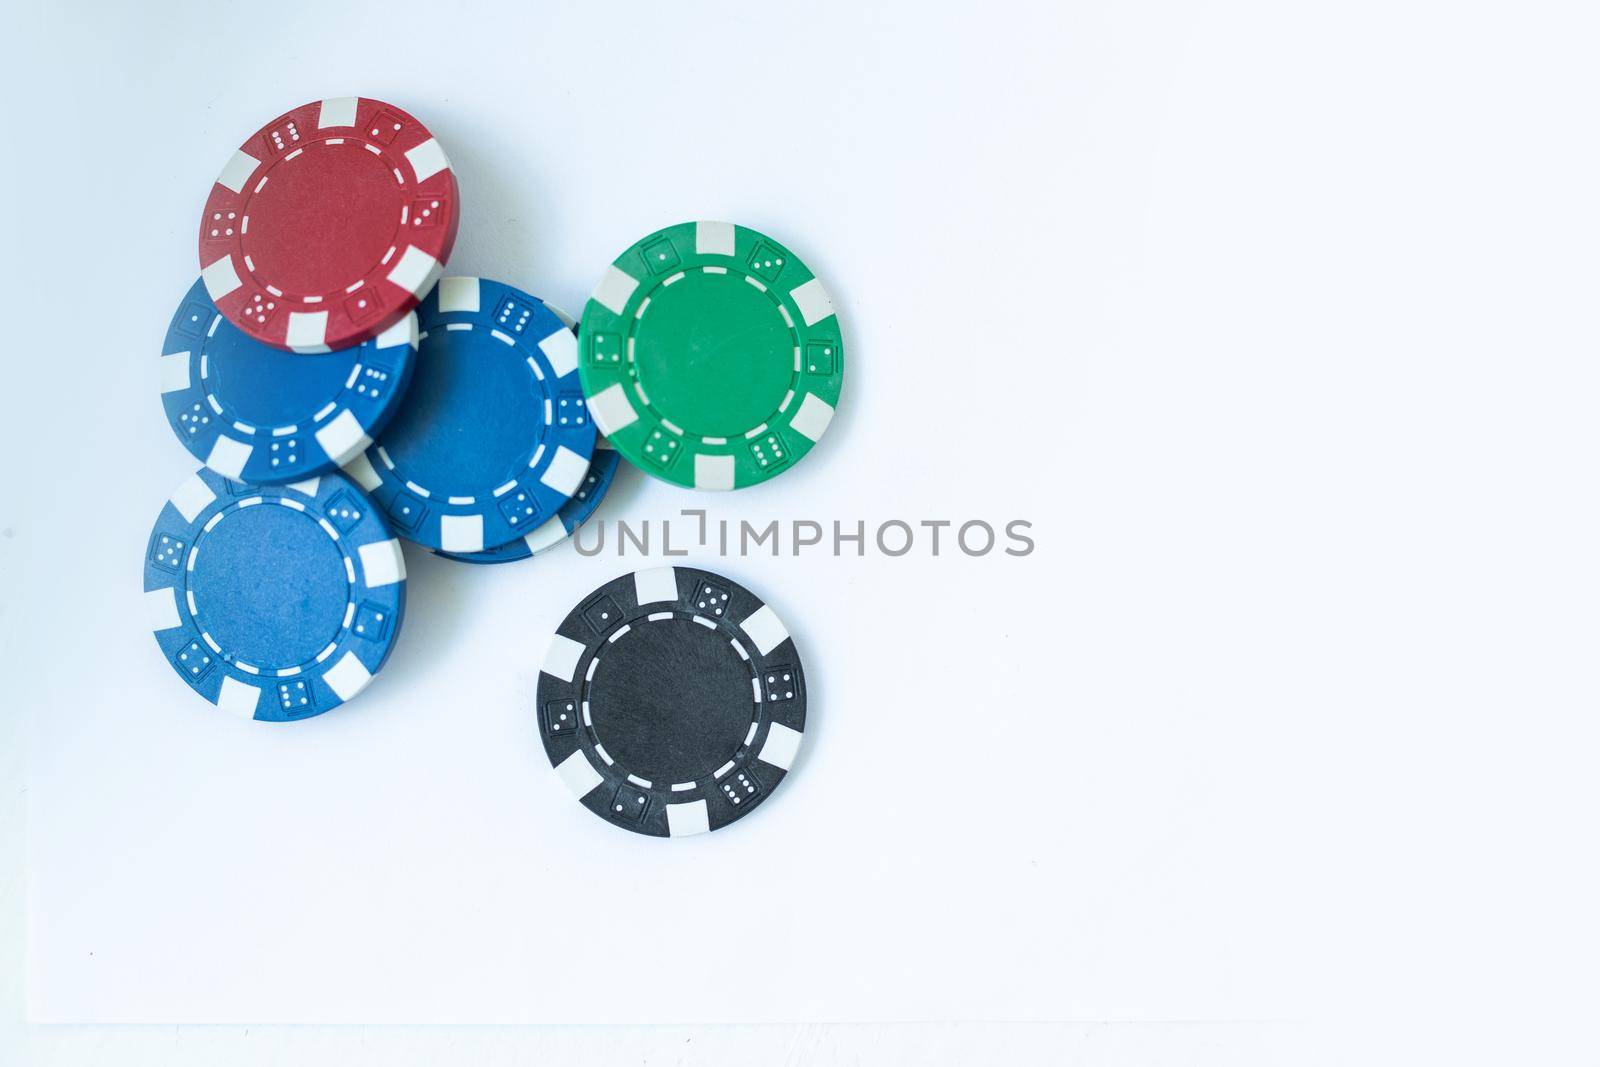 poker chips, studio shot on a white background by Andelov13